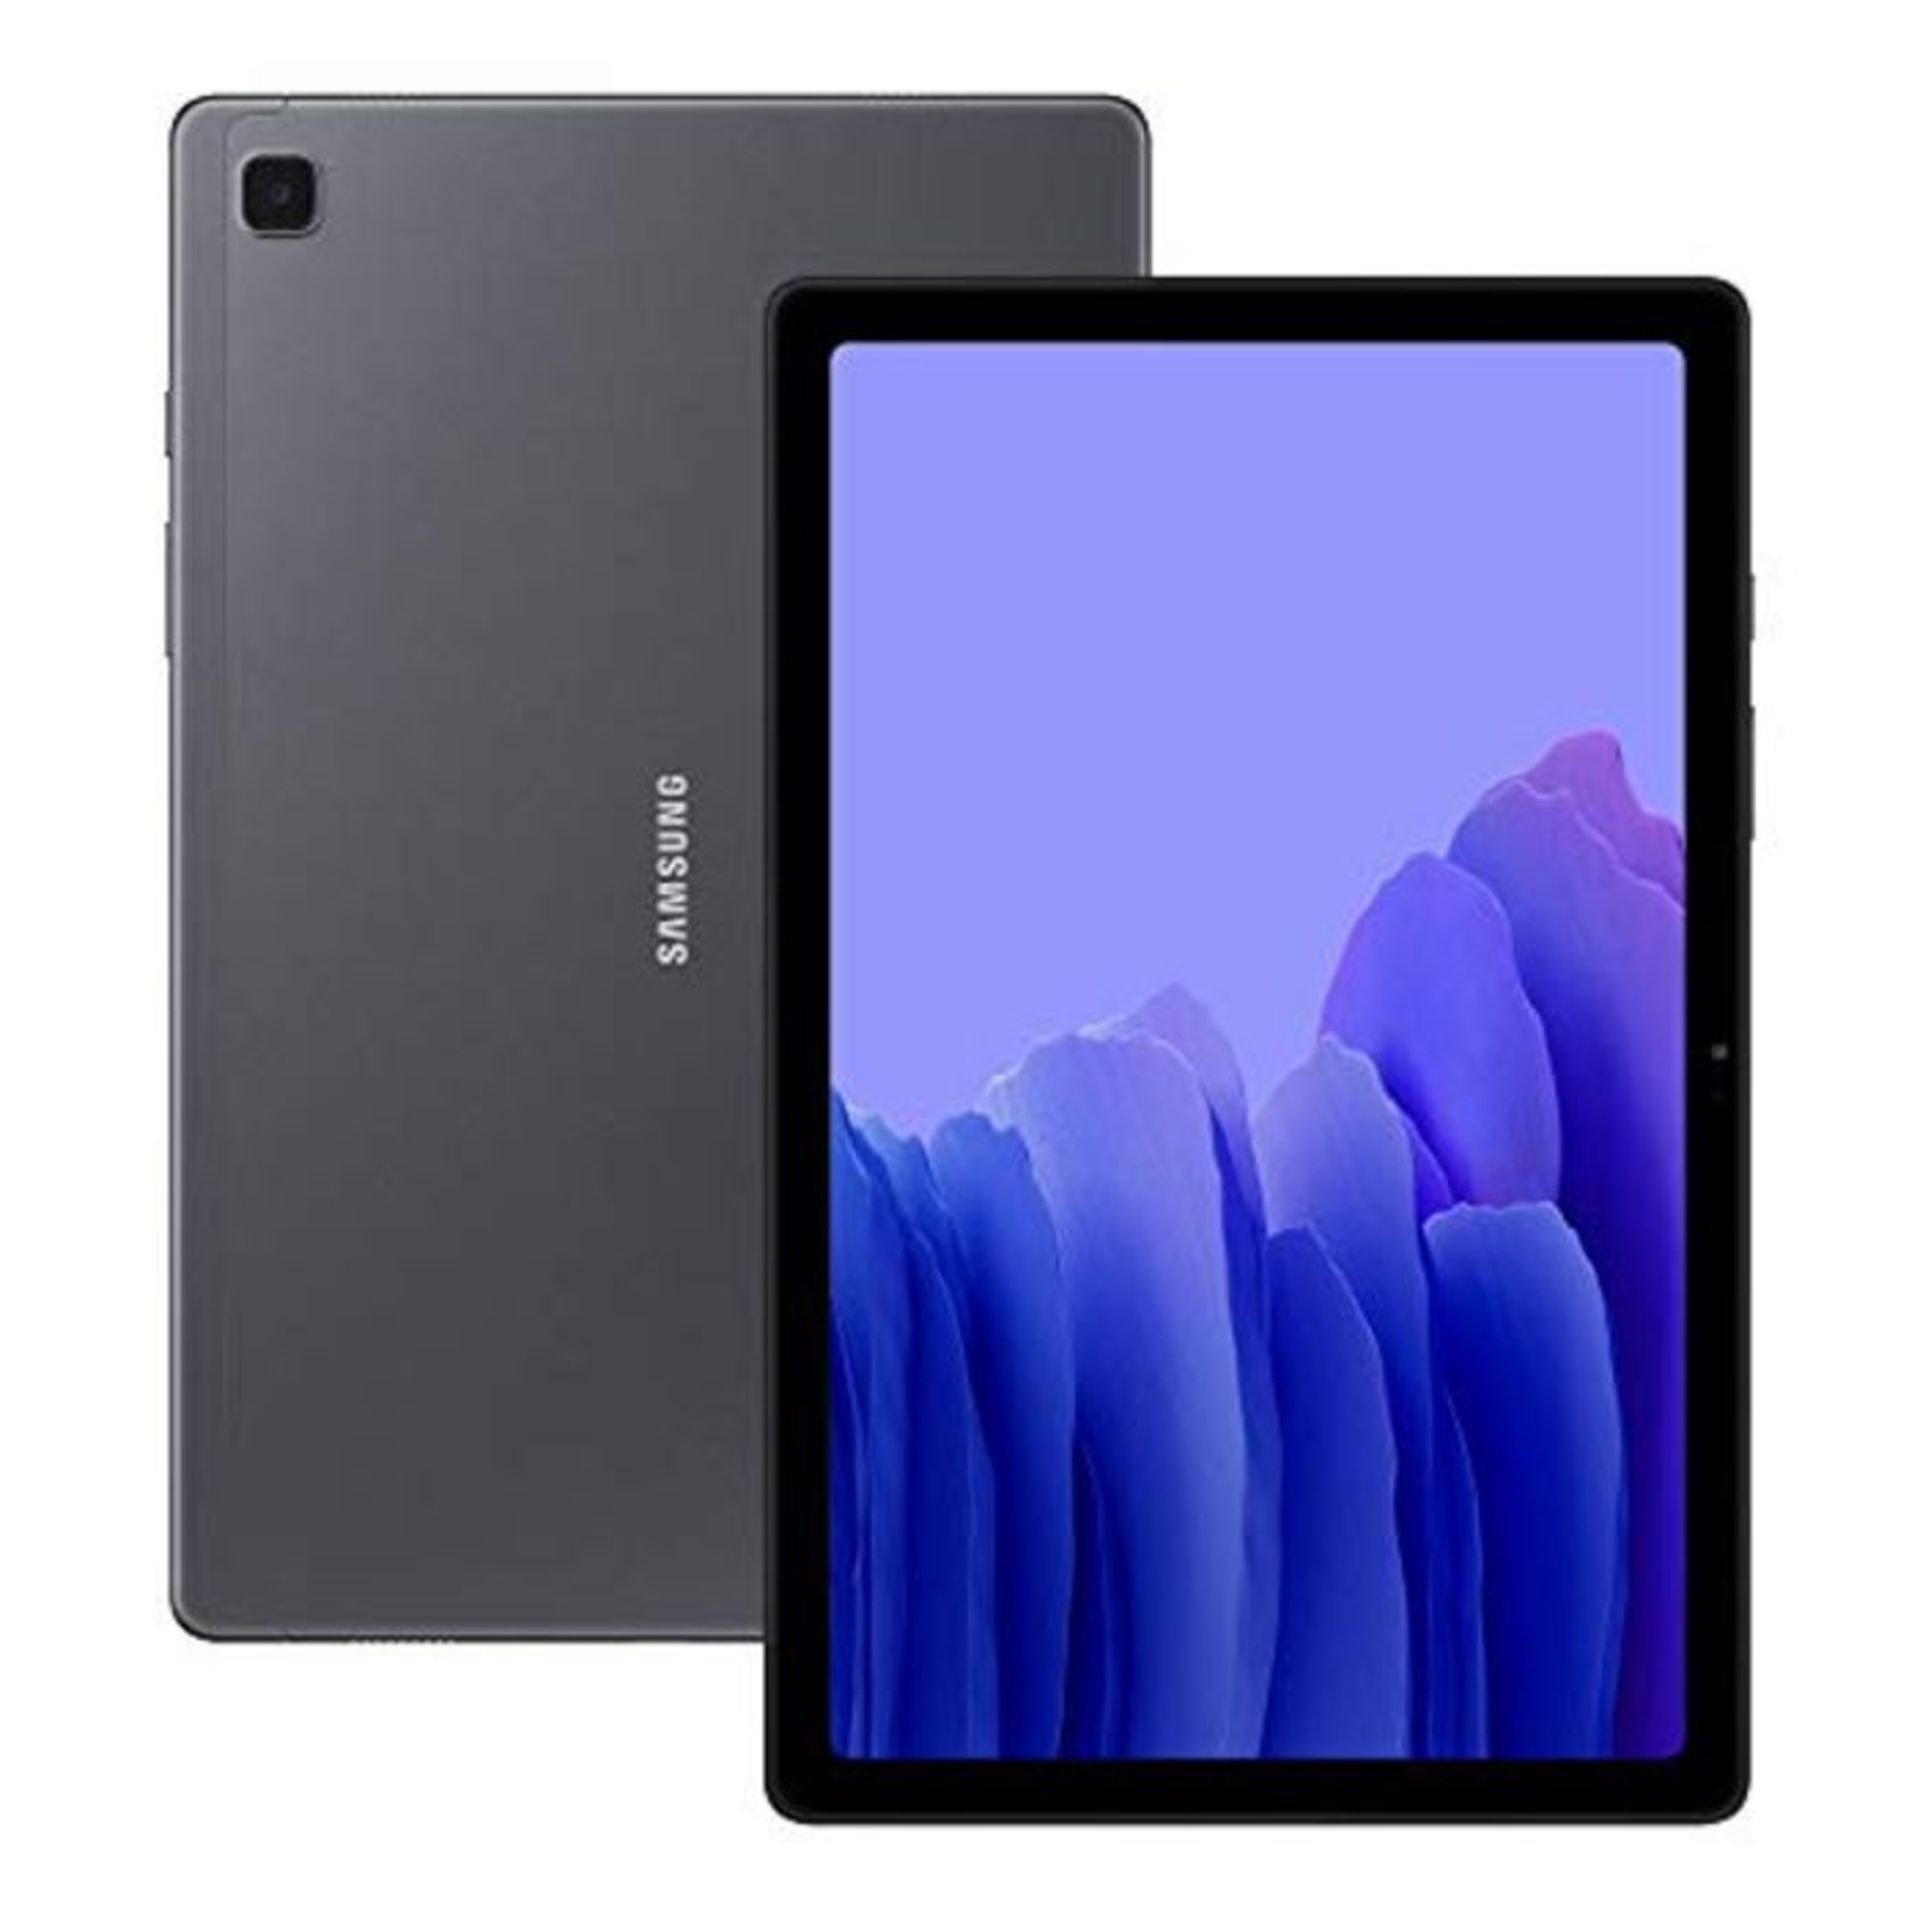 RRP £179.00 [CRACKED] Samsung Galaxy Tab A7 32 GB Wi-Fi Android Tablet - Dark Grey (UK Version)